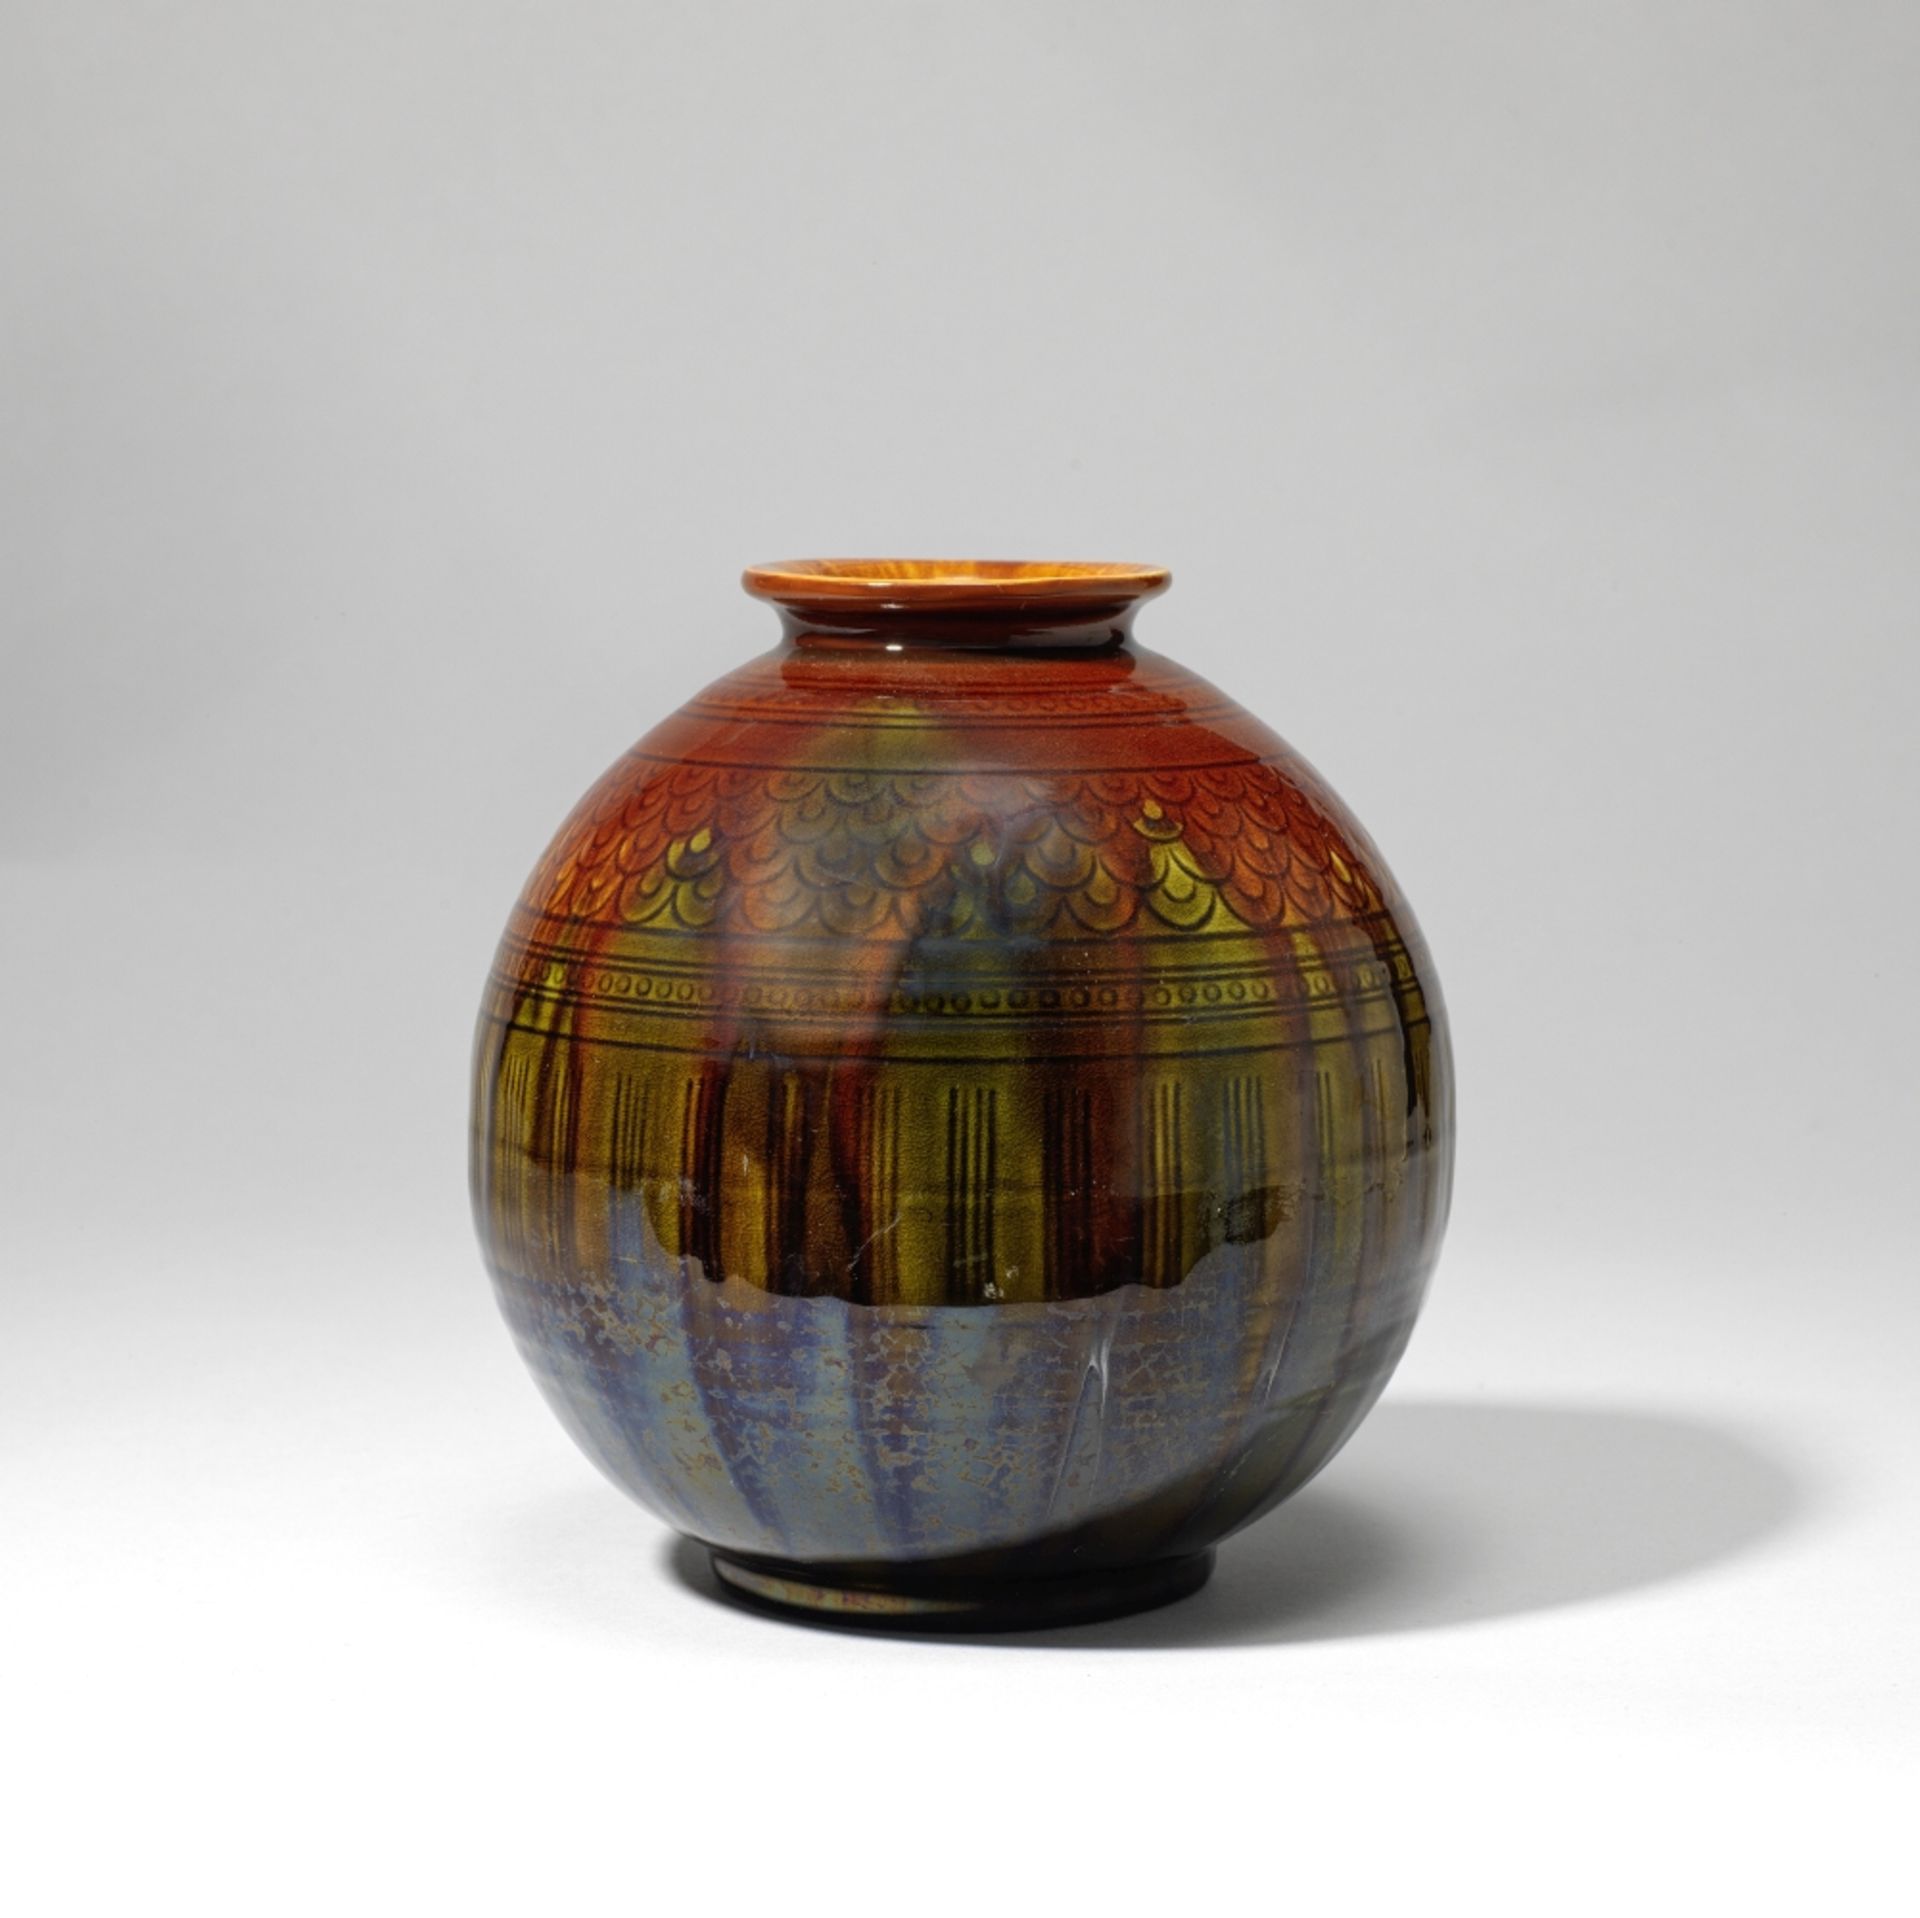 Dr Christopher Dresser: Made by Linthorpe Pottery Globular vase, circa 1880